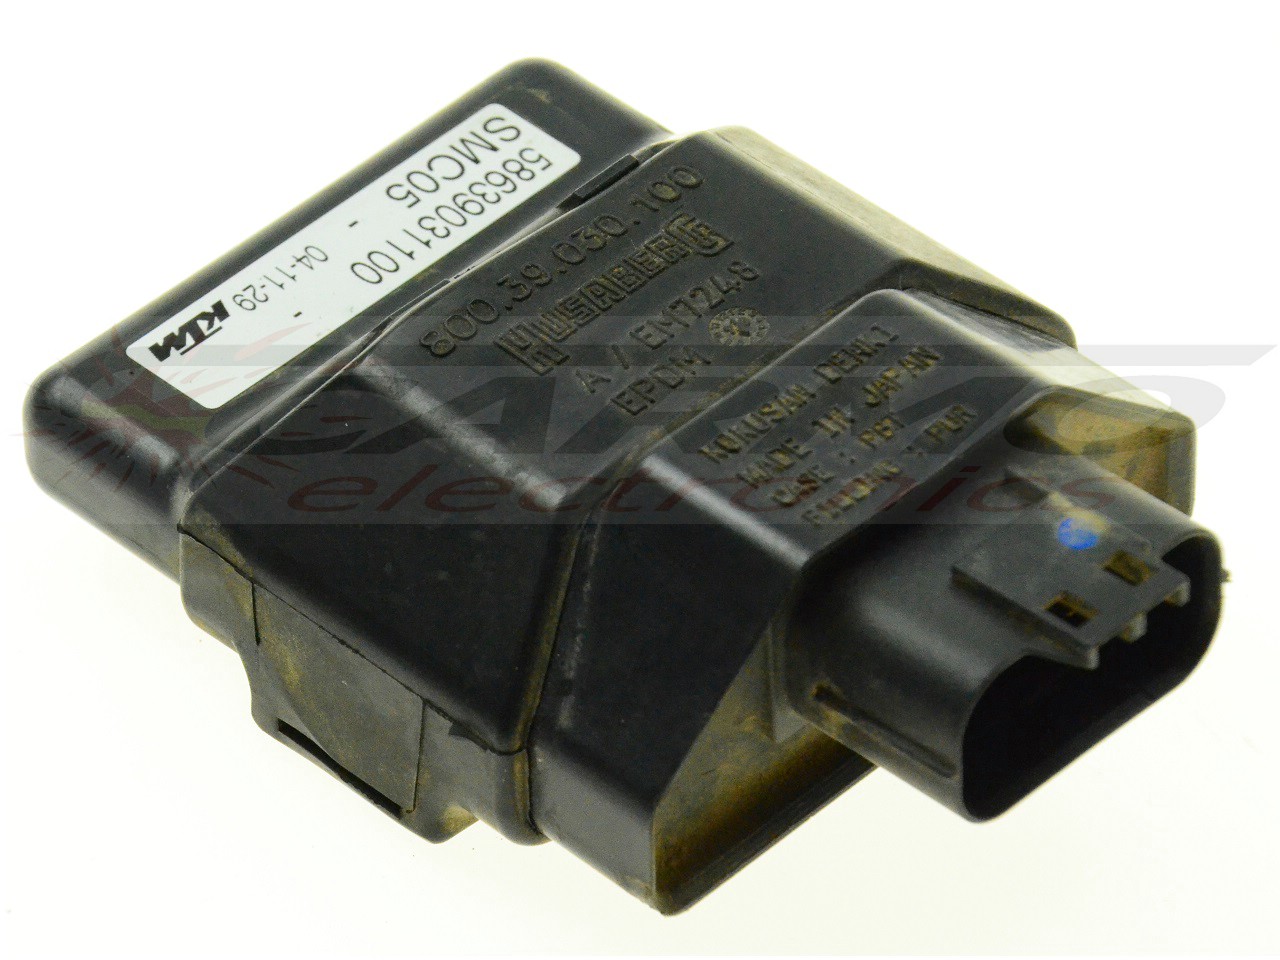 660 SMC igniter ignition module CDI Box (KTM, SMC05, 58639031100, Kokusan Denki)